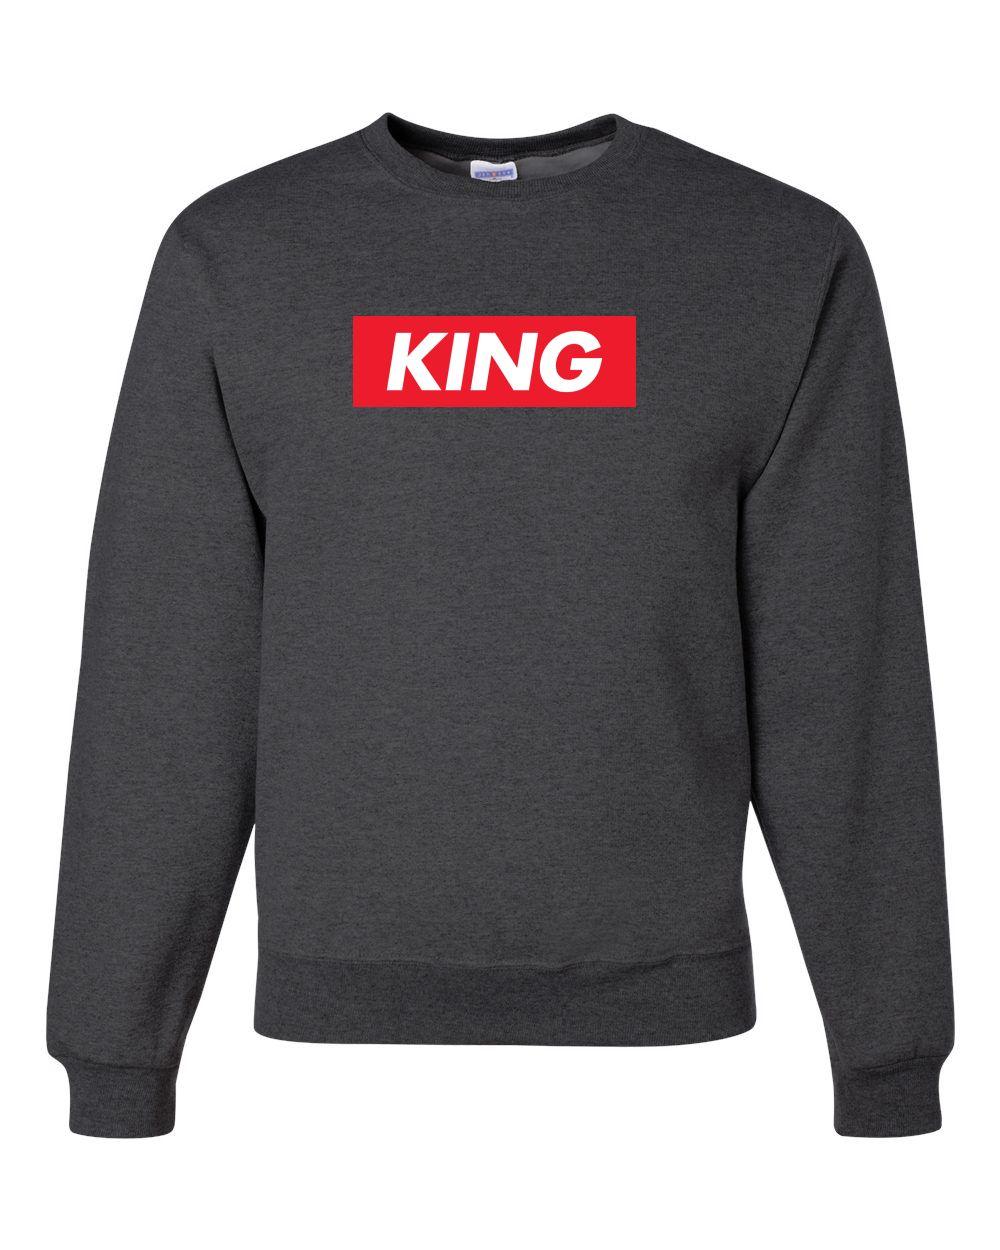 Savage King Logo - King Red Box Savage Logo Mens Sweatshirt Birthday Anniversary Gift